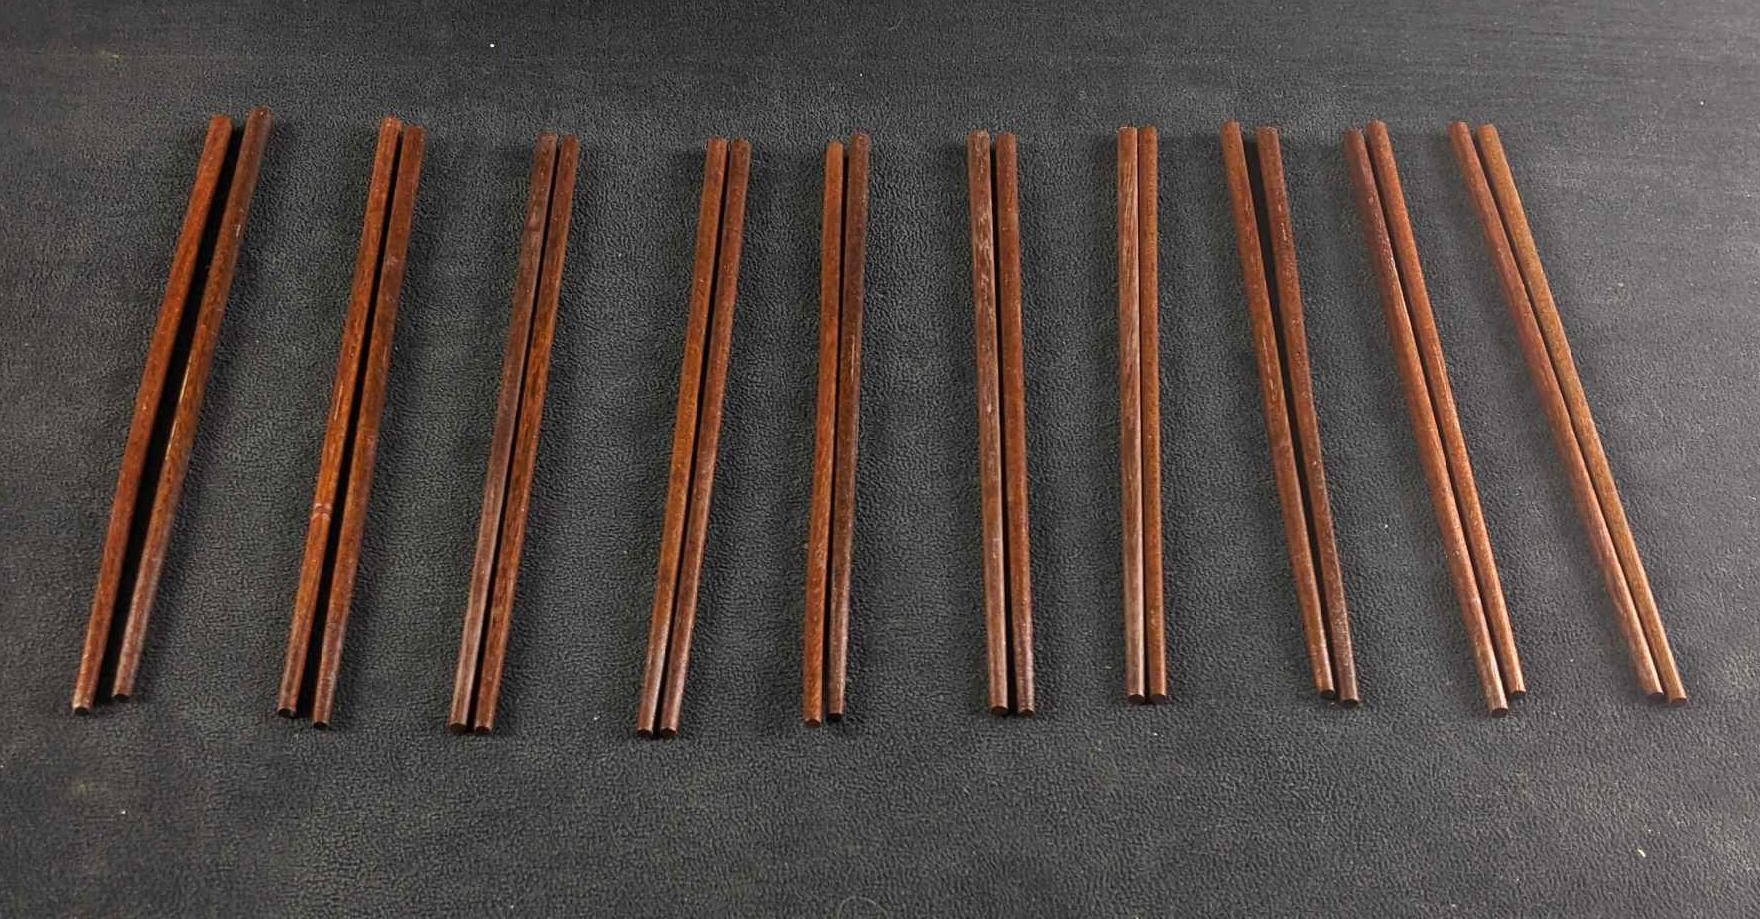 10 Pairs of Wooden Chopsticks